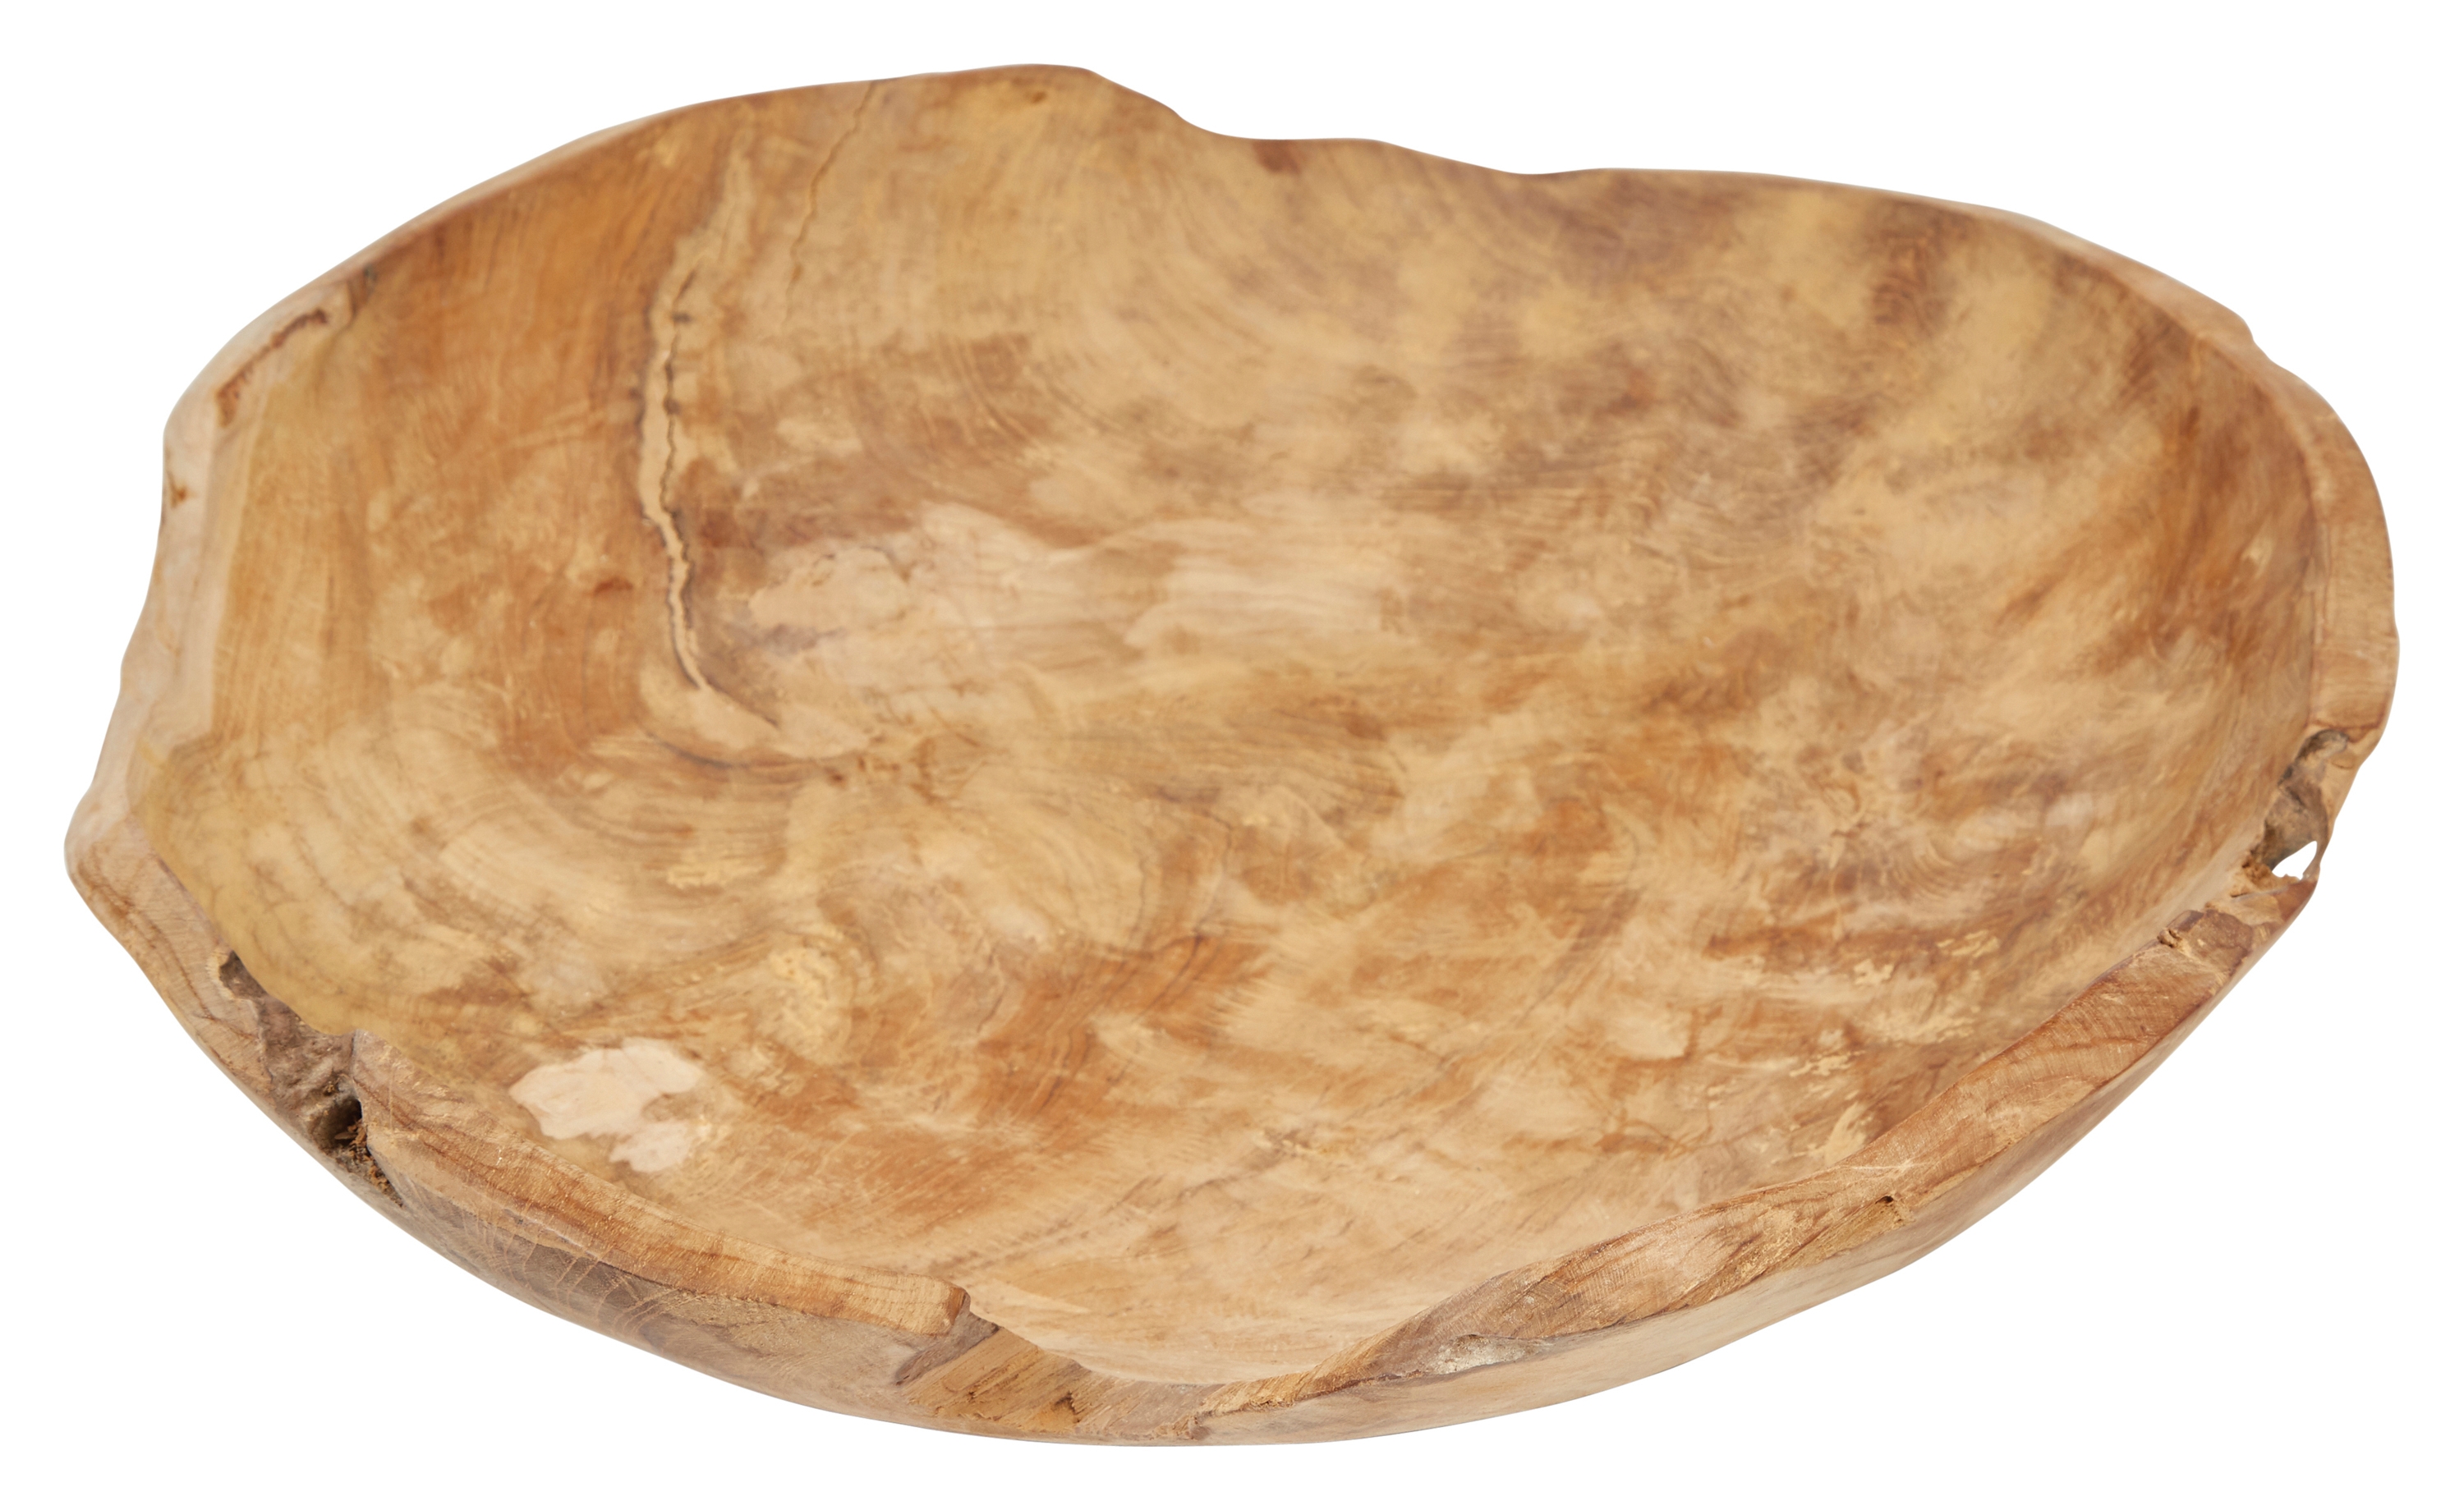 Teak Wood Bowl (Each one will vary) - Image 0